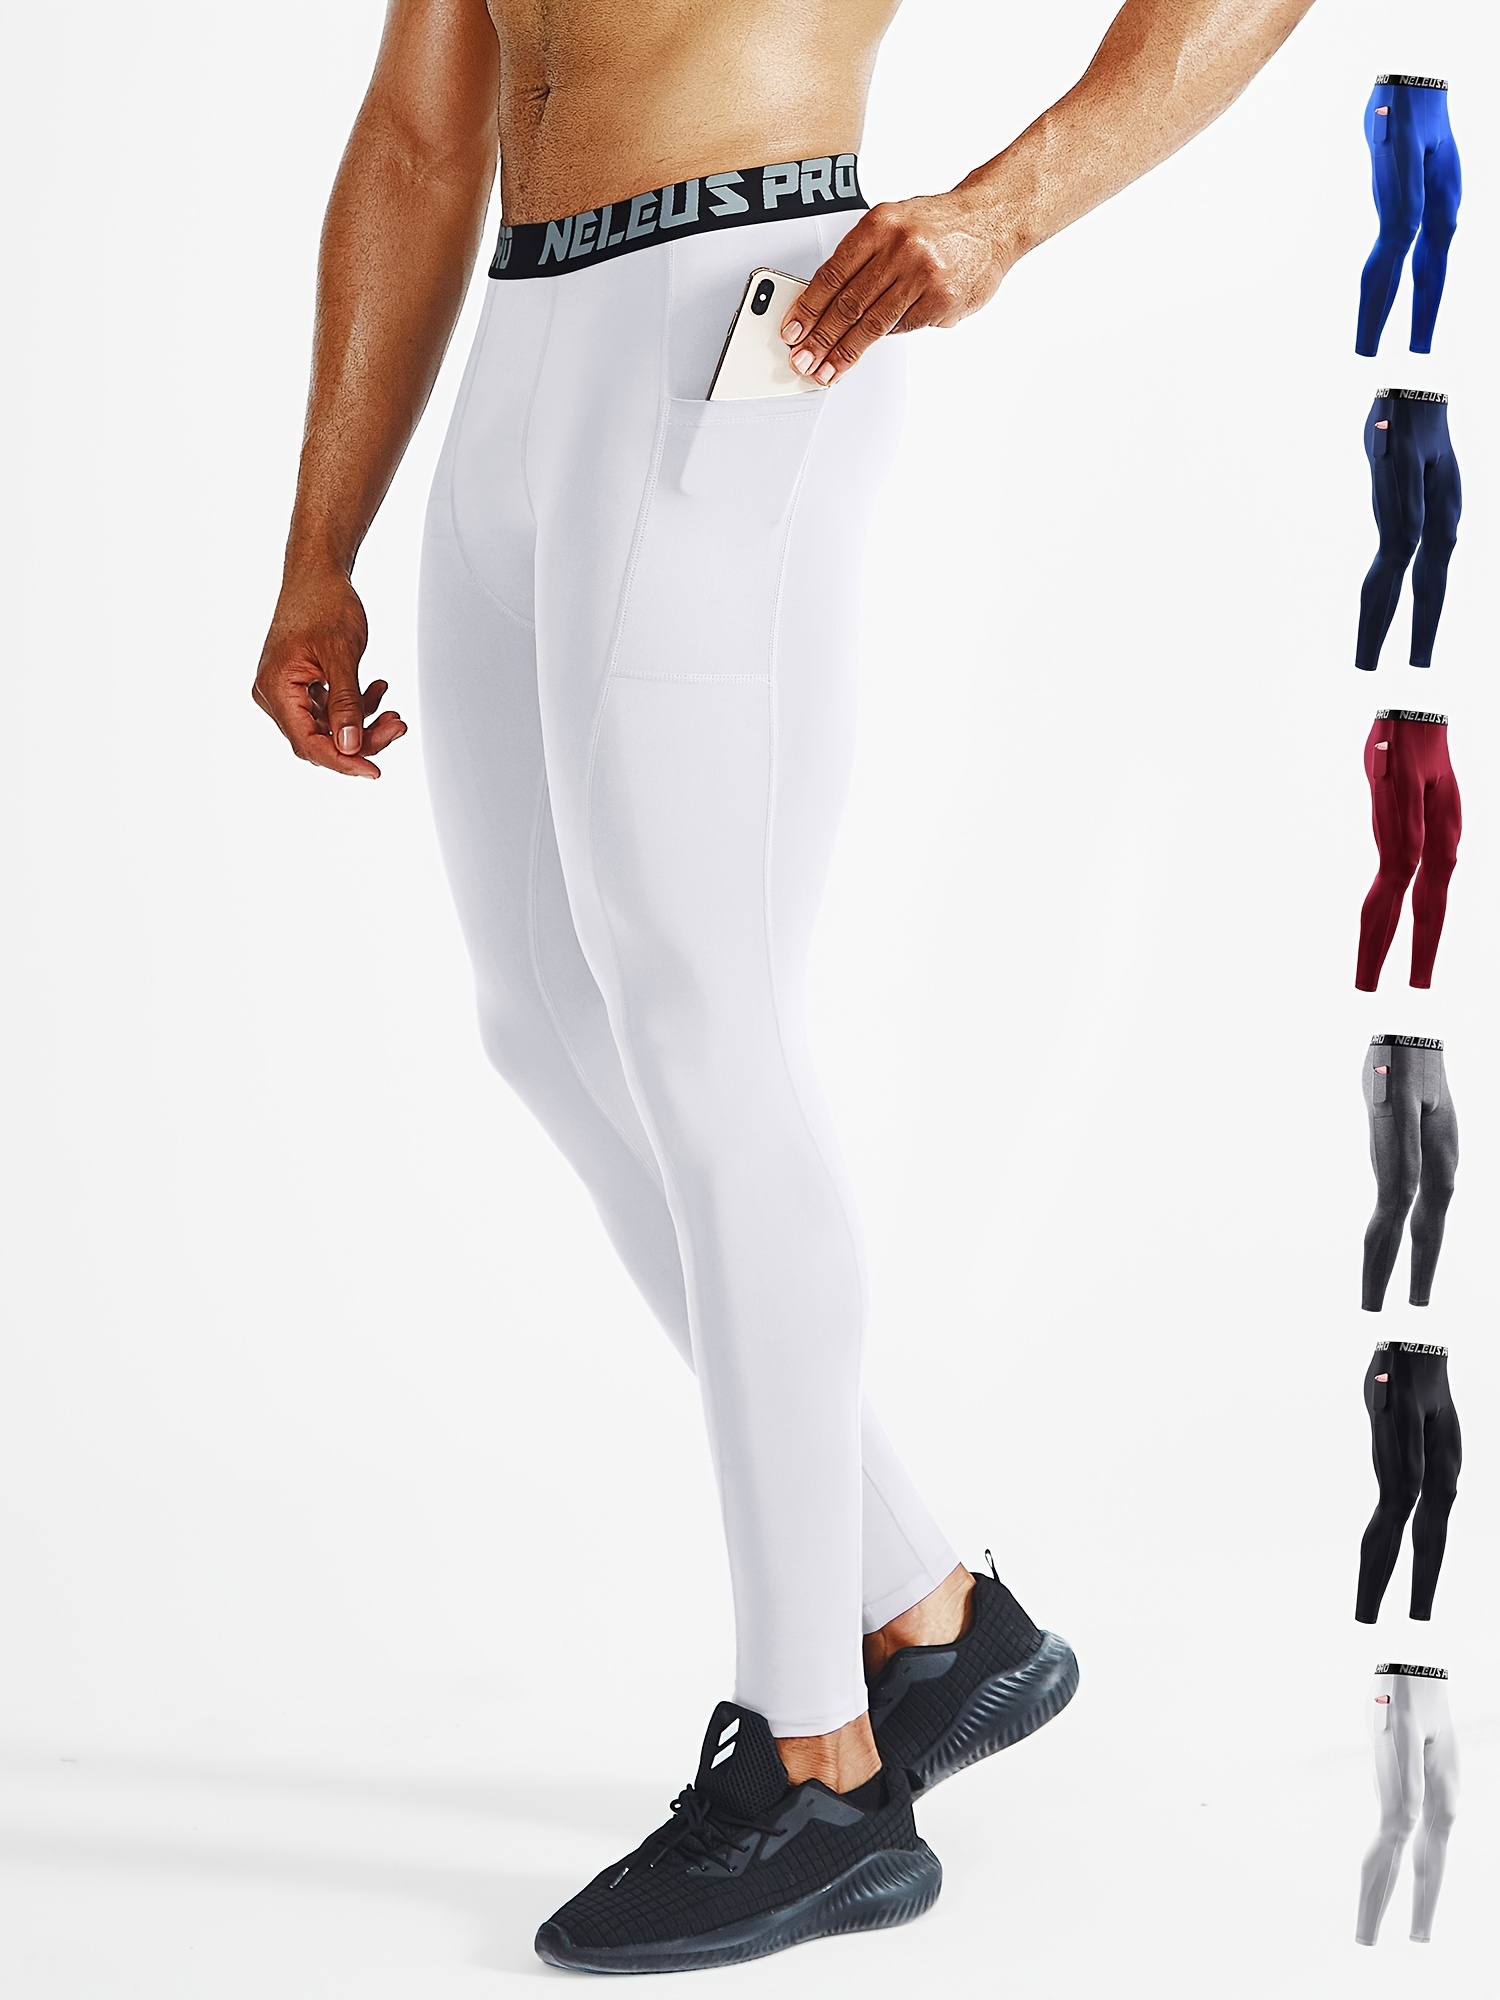 Nike Women's Pro Compression Training Tights Black/White Size